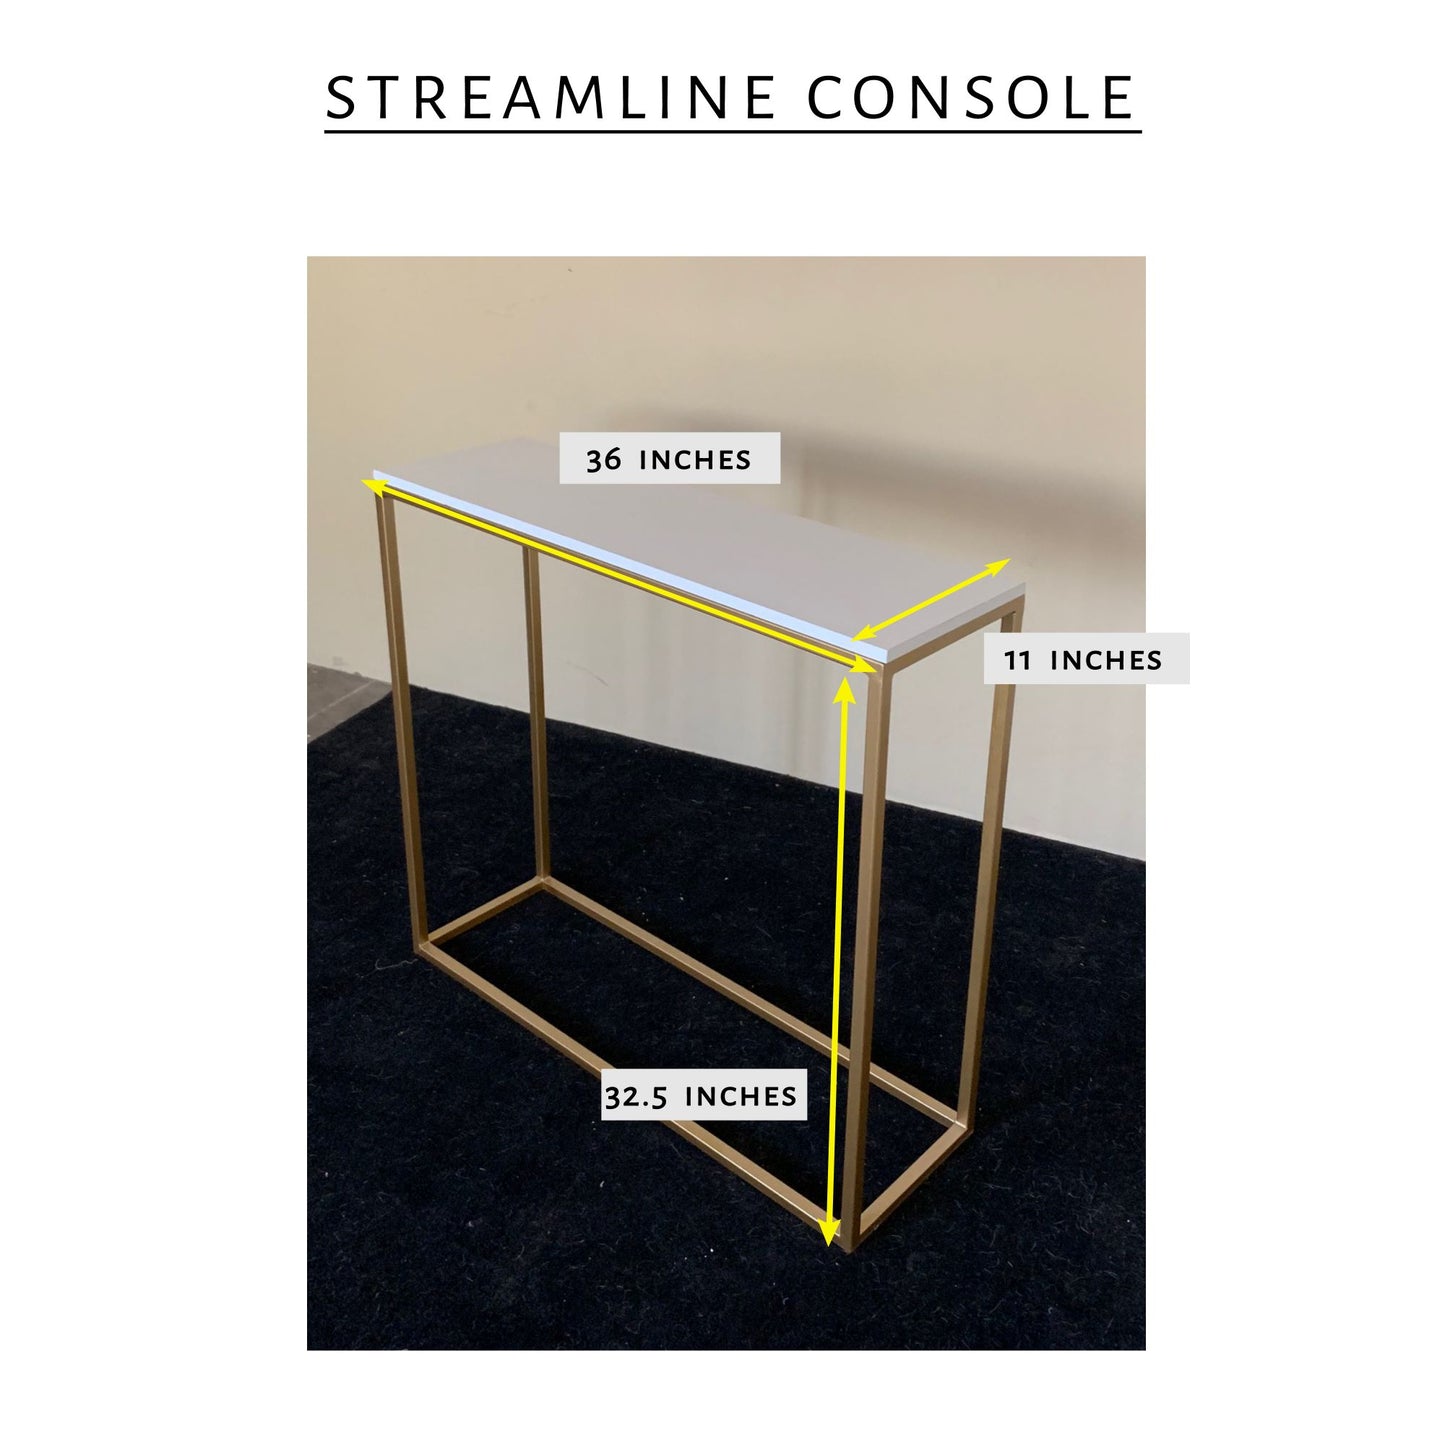 Streamline Console